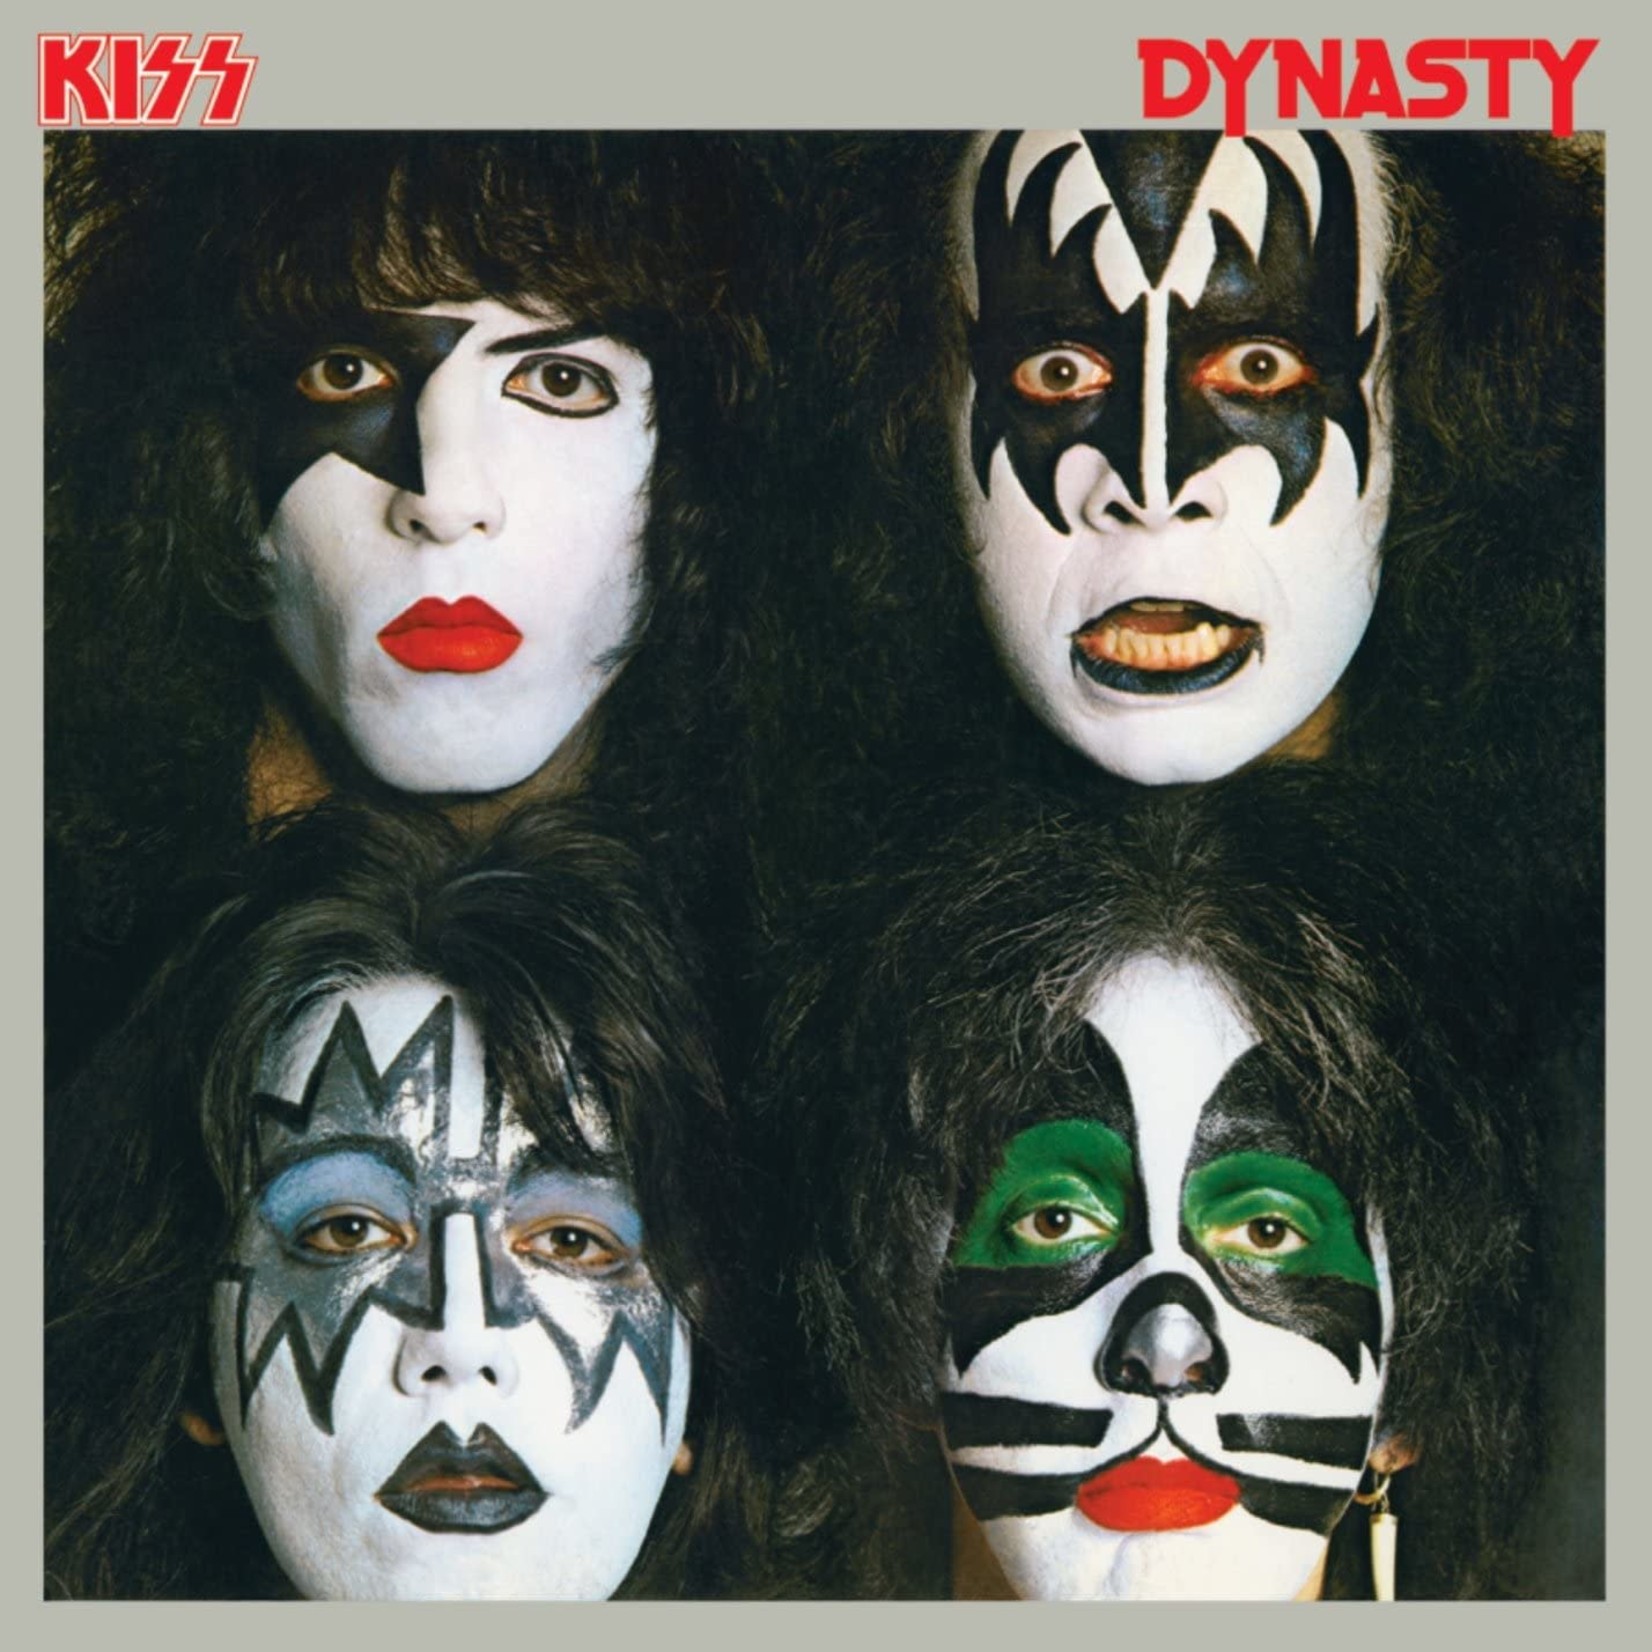 [New] Kiss - Dynasty